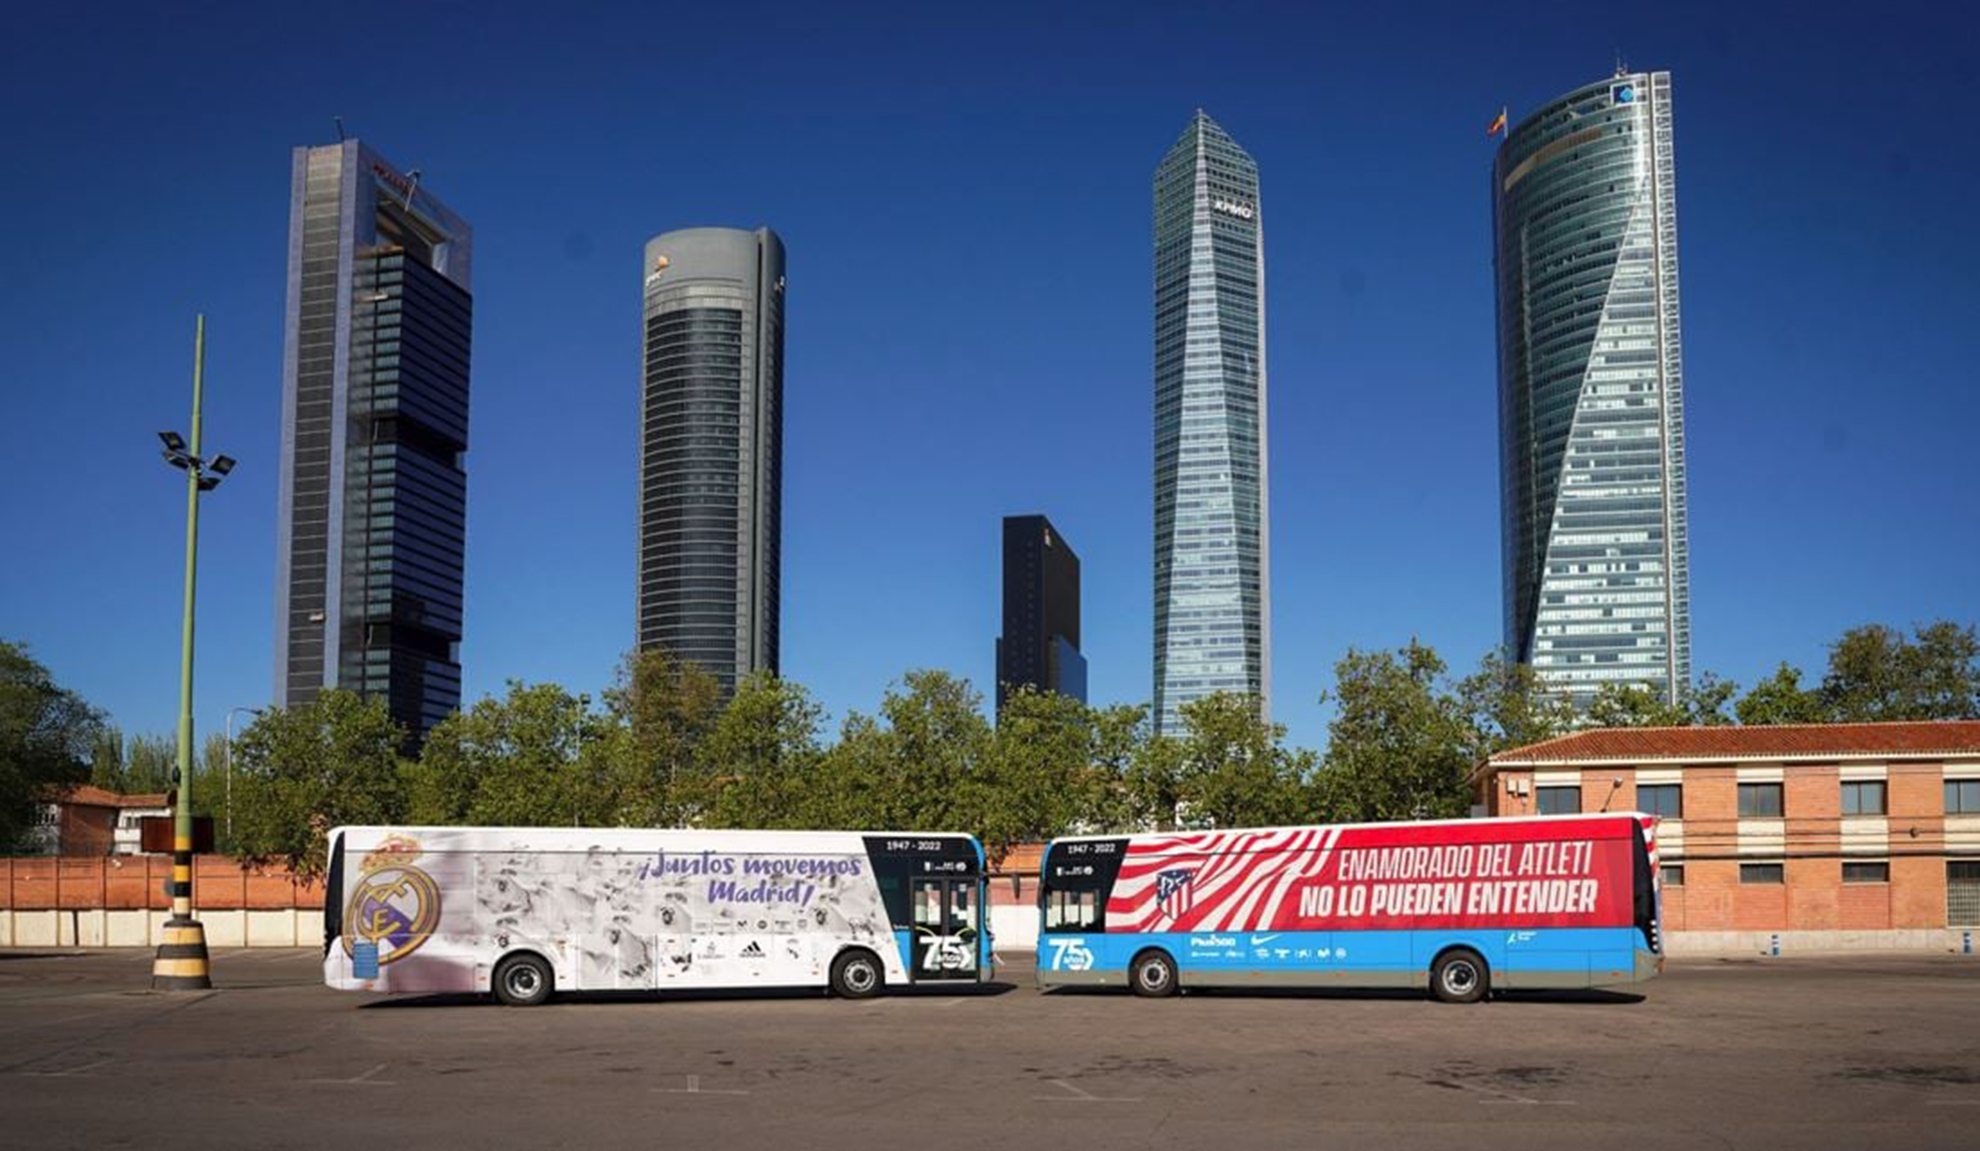 Atltico de Madrid - Real Madrid - Derbi - autobuses - EMT - Wanda Metropolitano